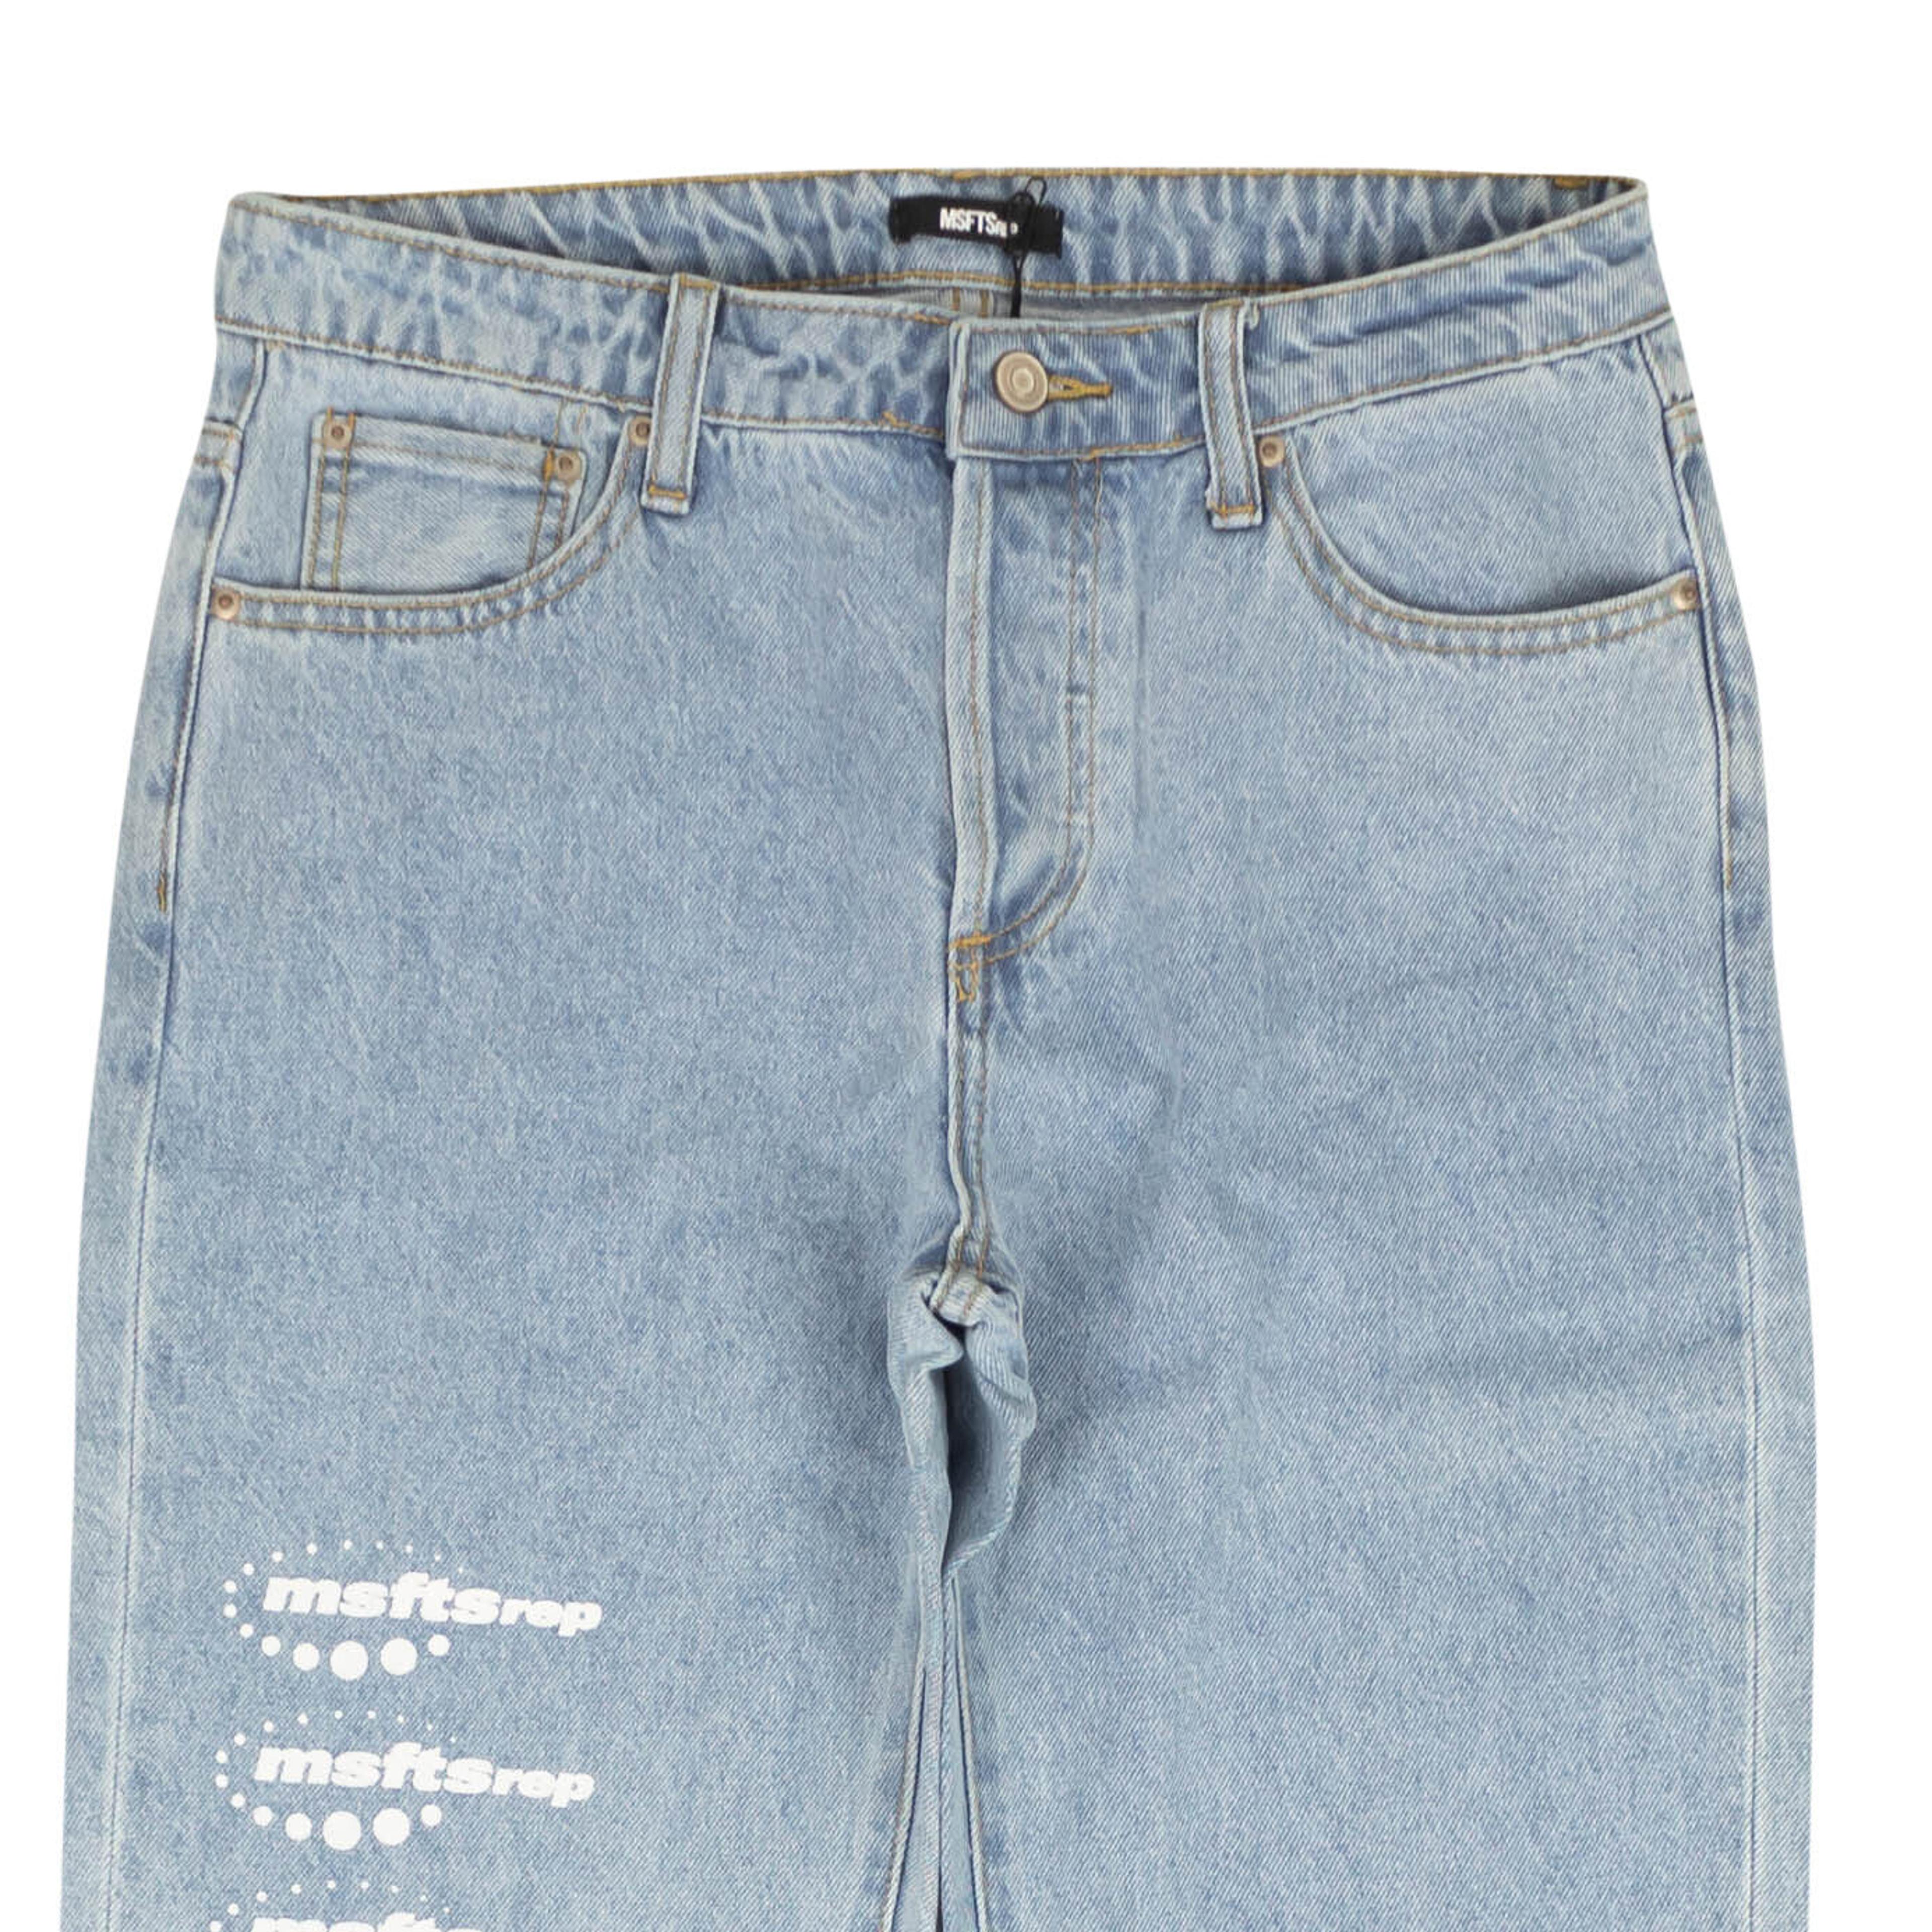 Alternate View 1 of Blue Denim Straight Jeans